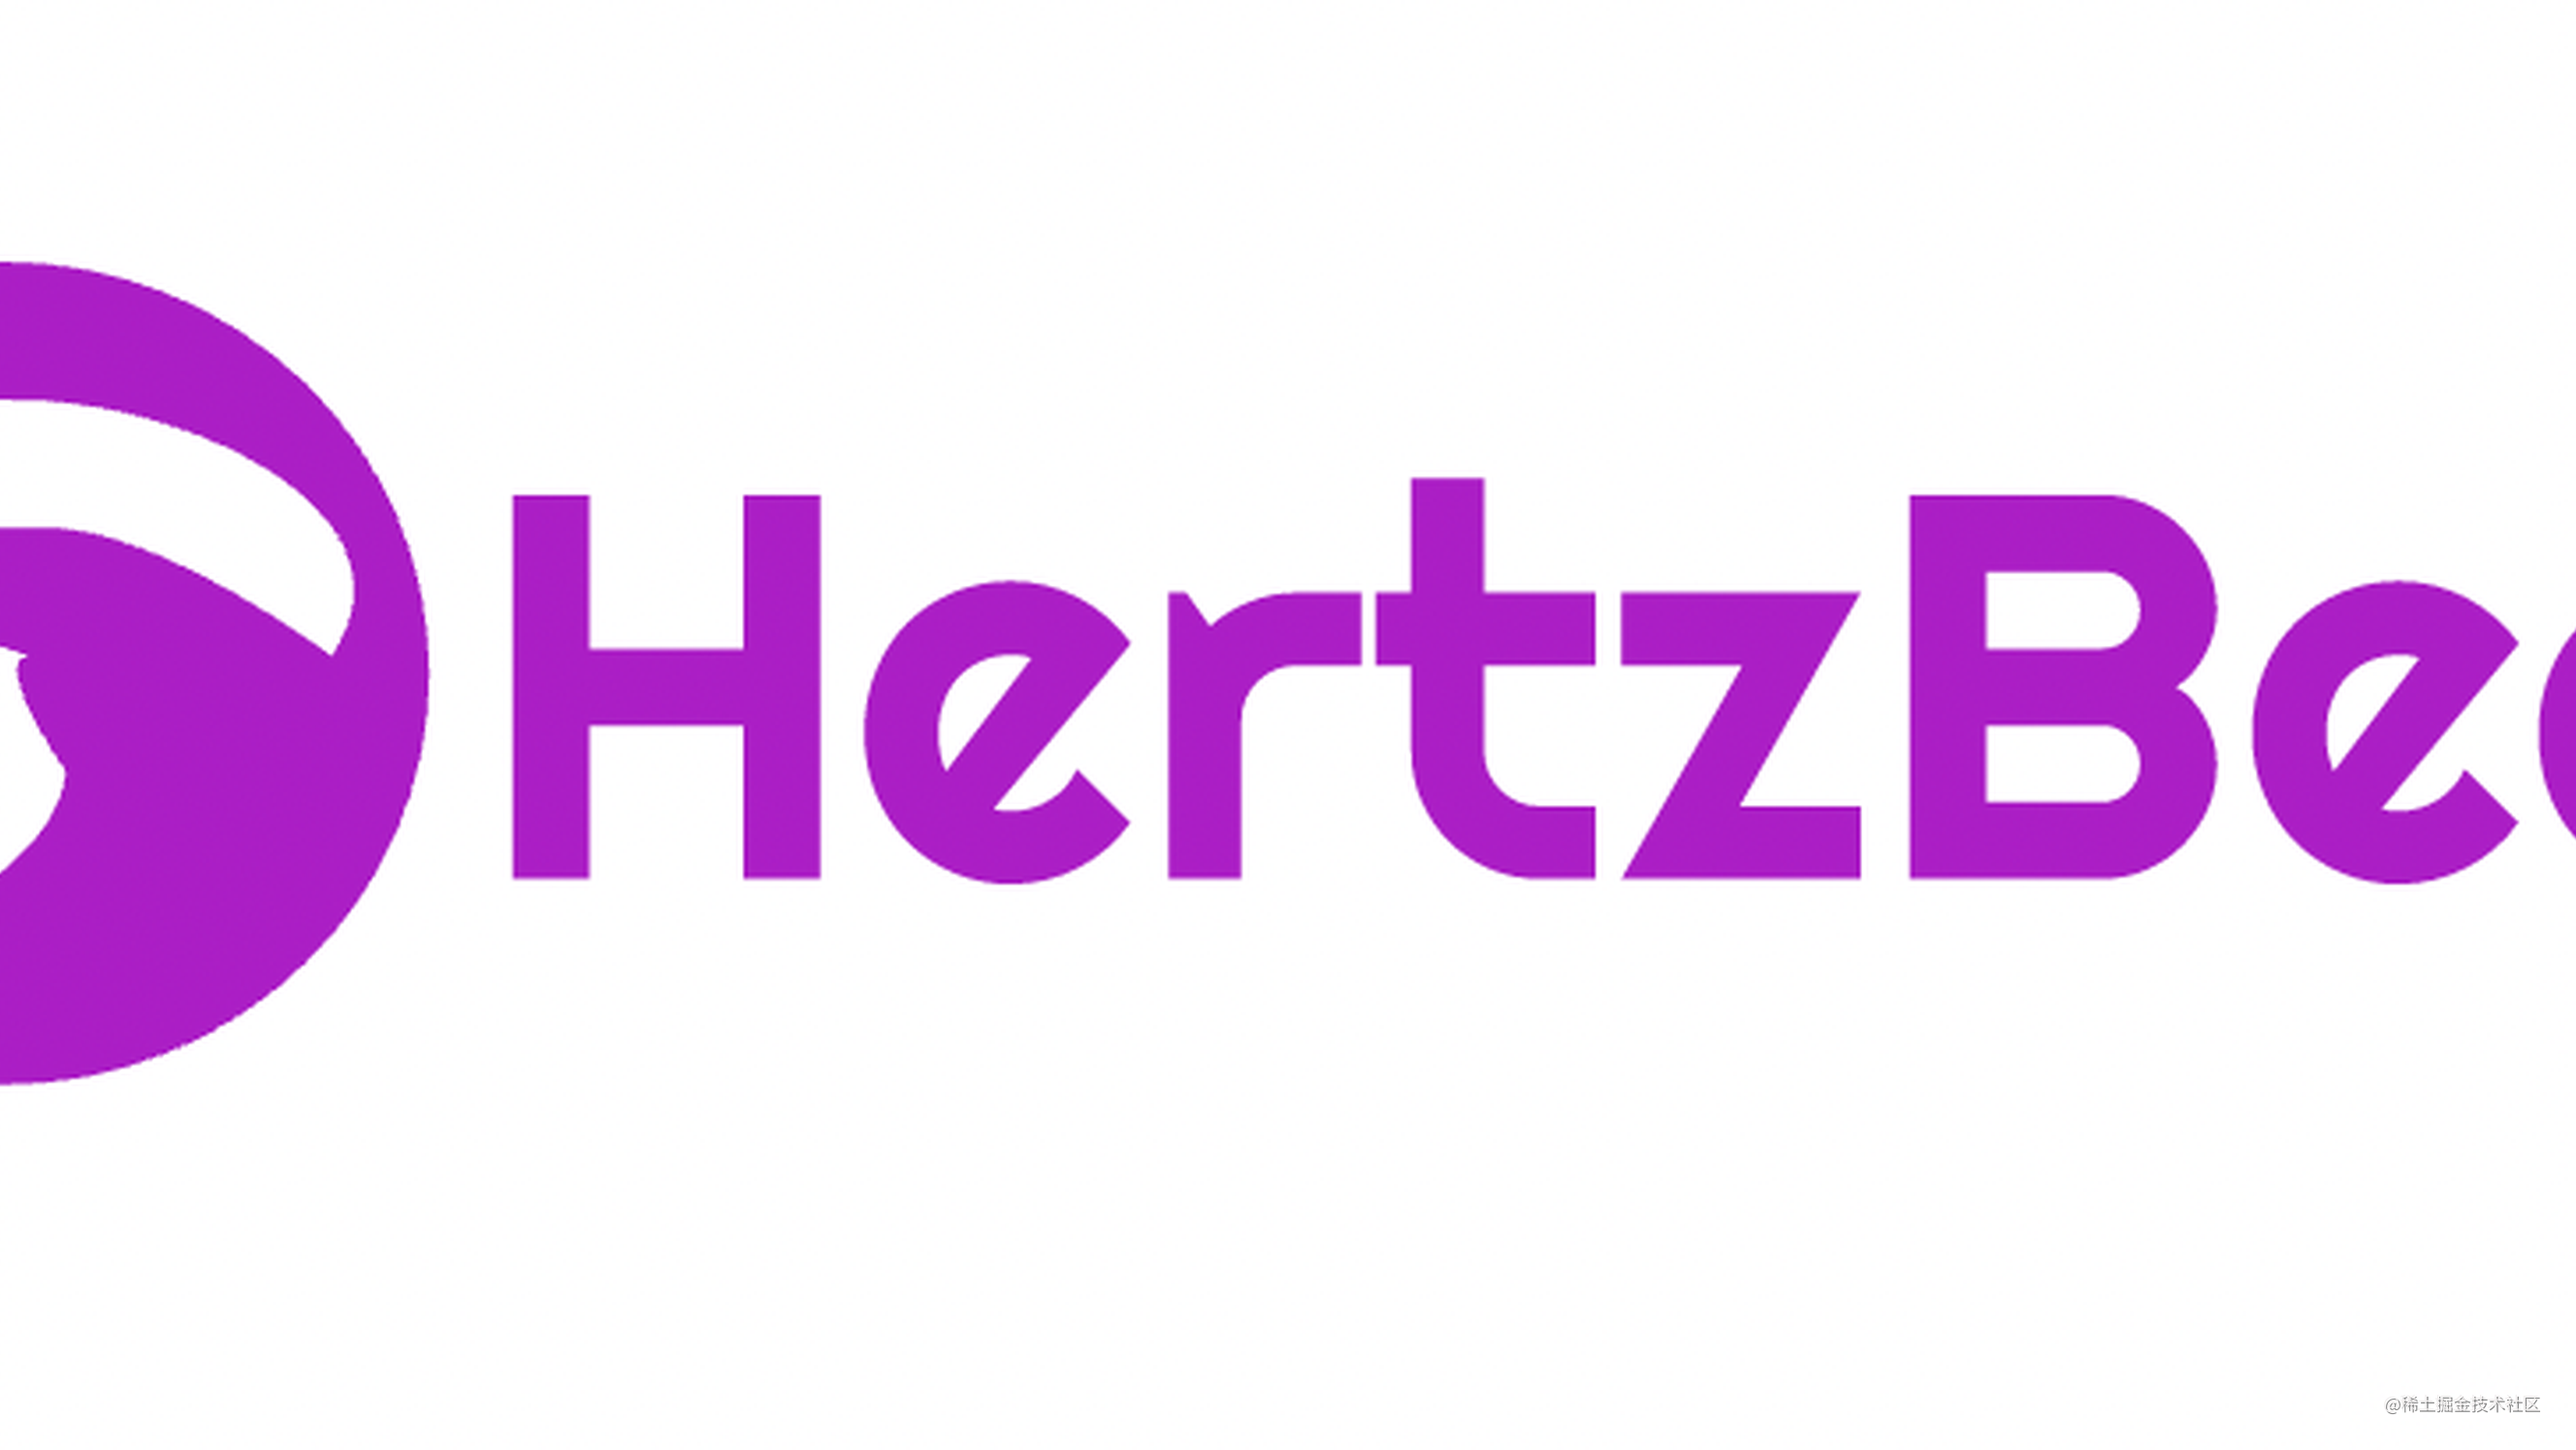 HertzBeat v1.2.0 发布！易用友好的开源实时监控系统 